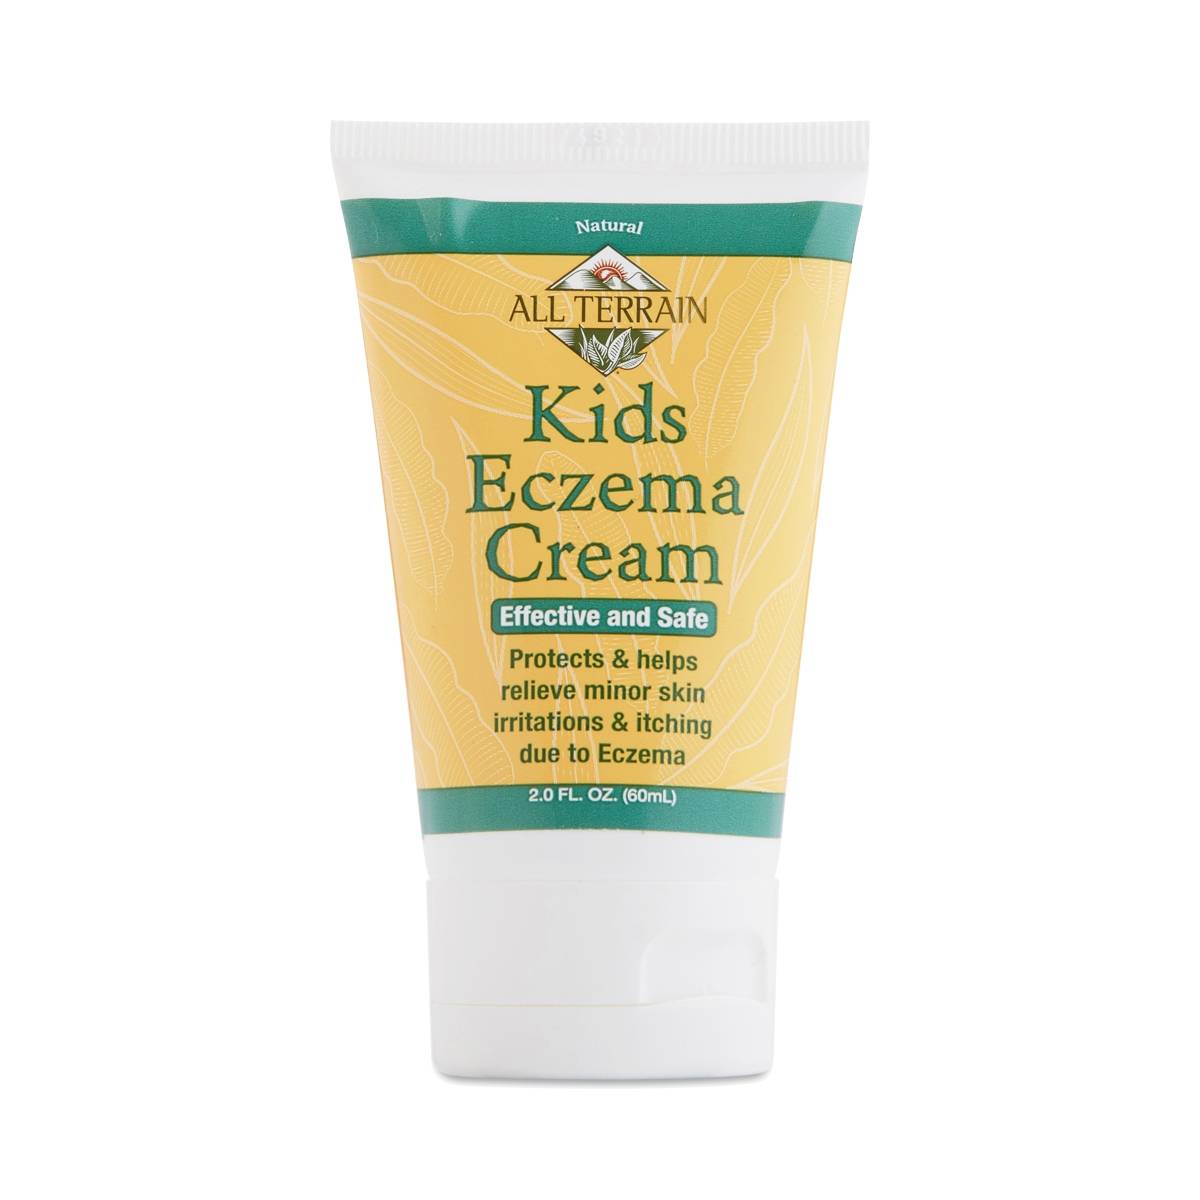 All Terrain Kids Eczema Cream